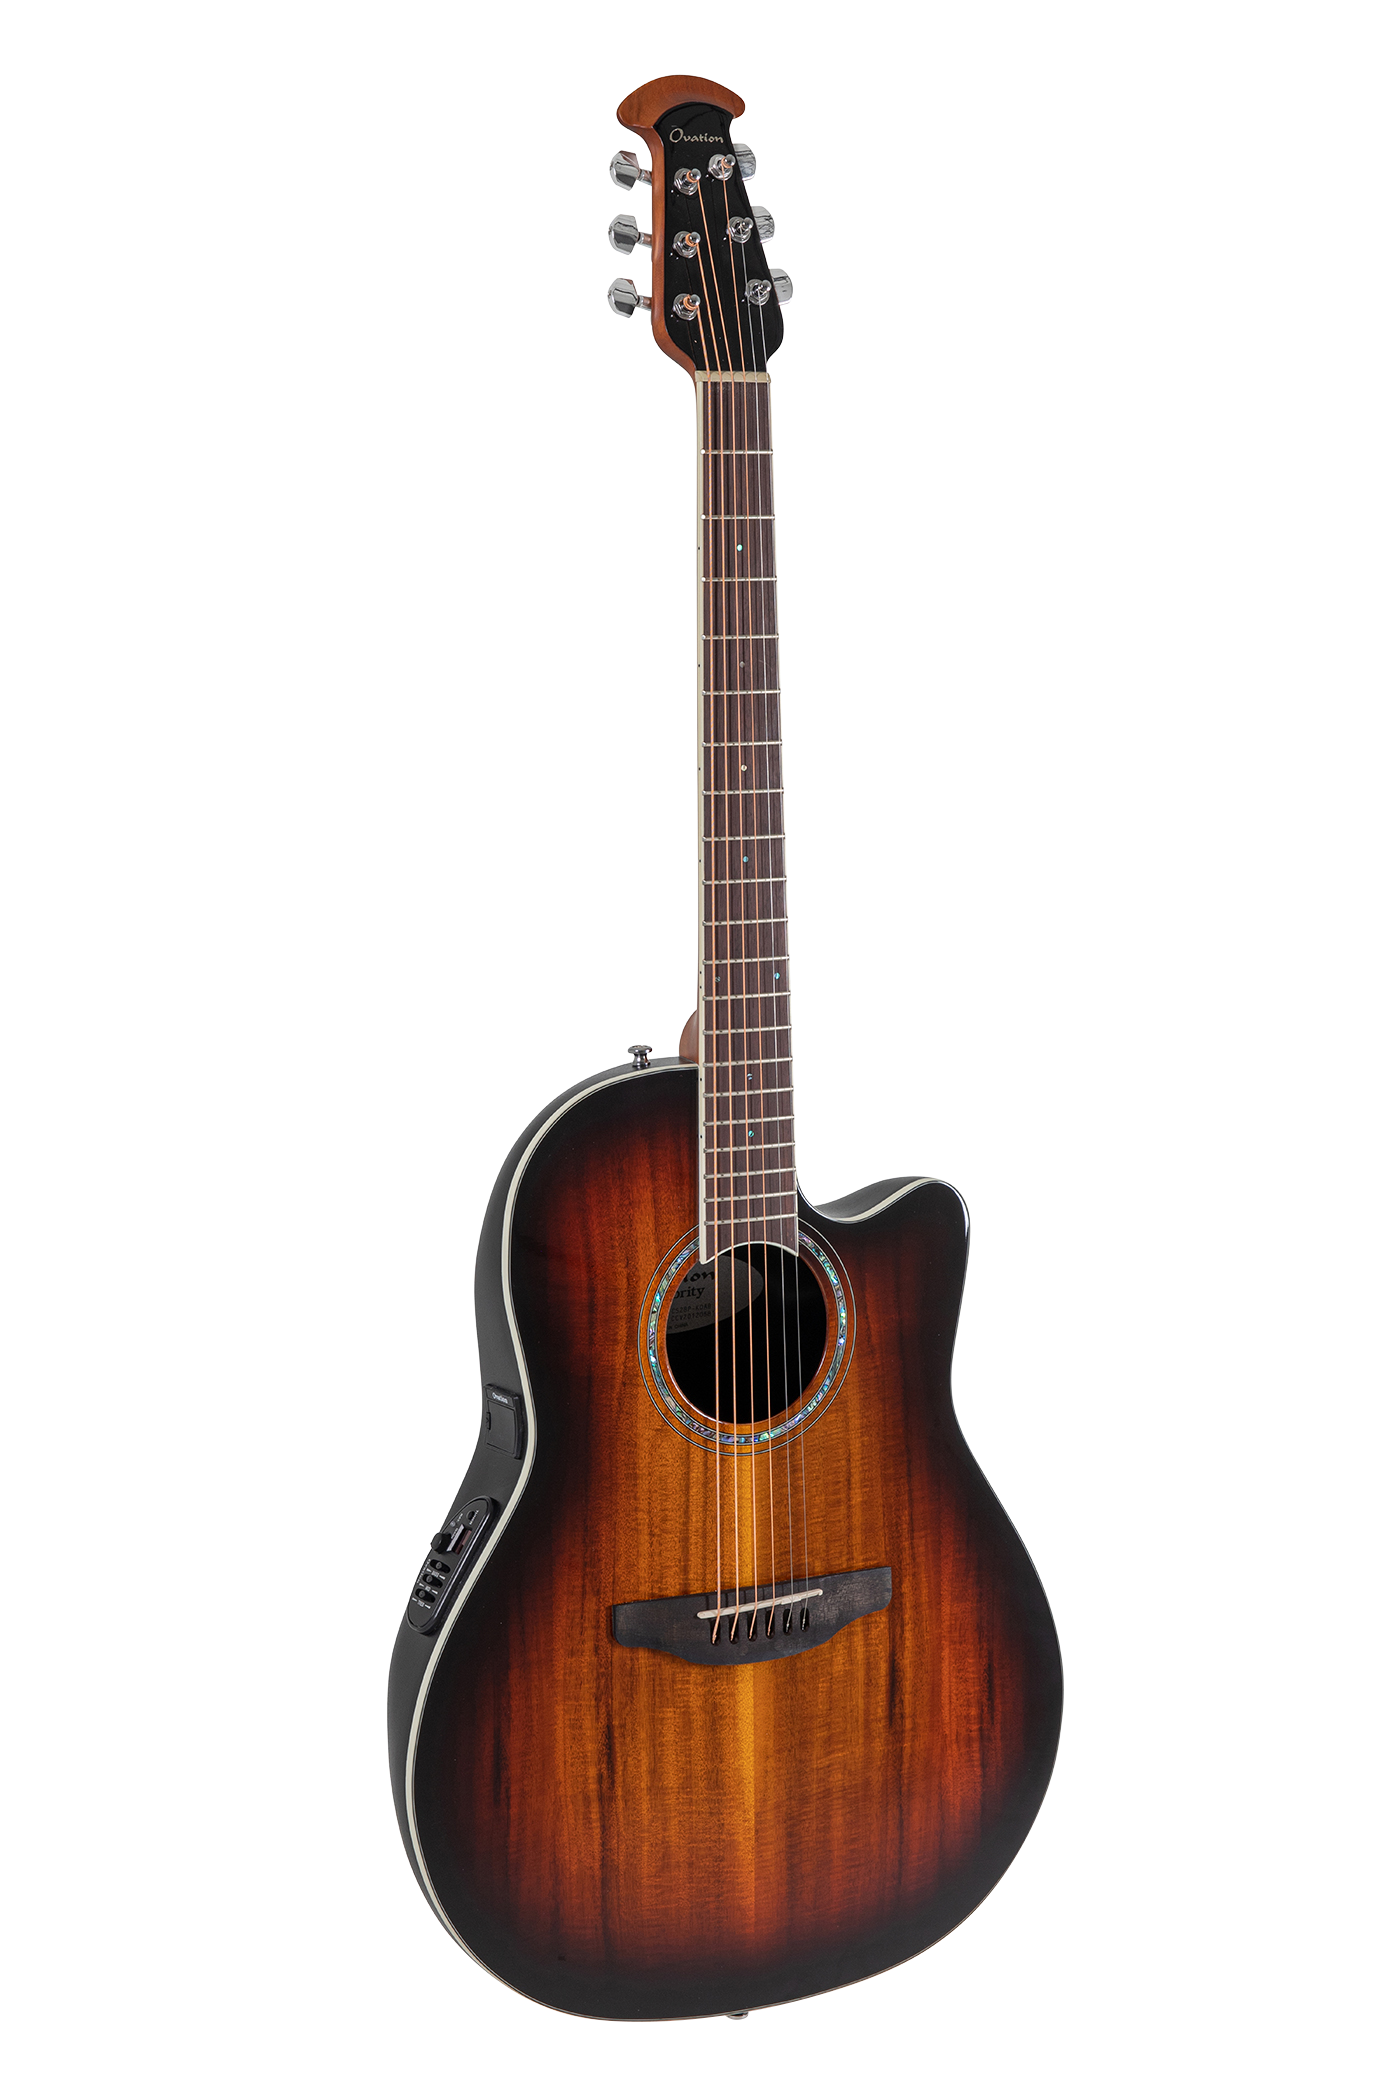 Ovation E-Acoustic Guitar Celebrity Standard Plus Super Shallow